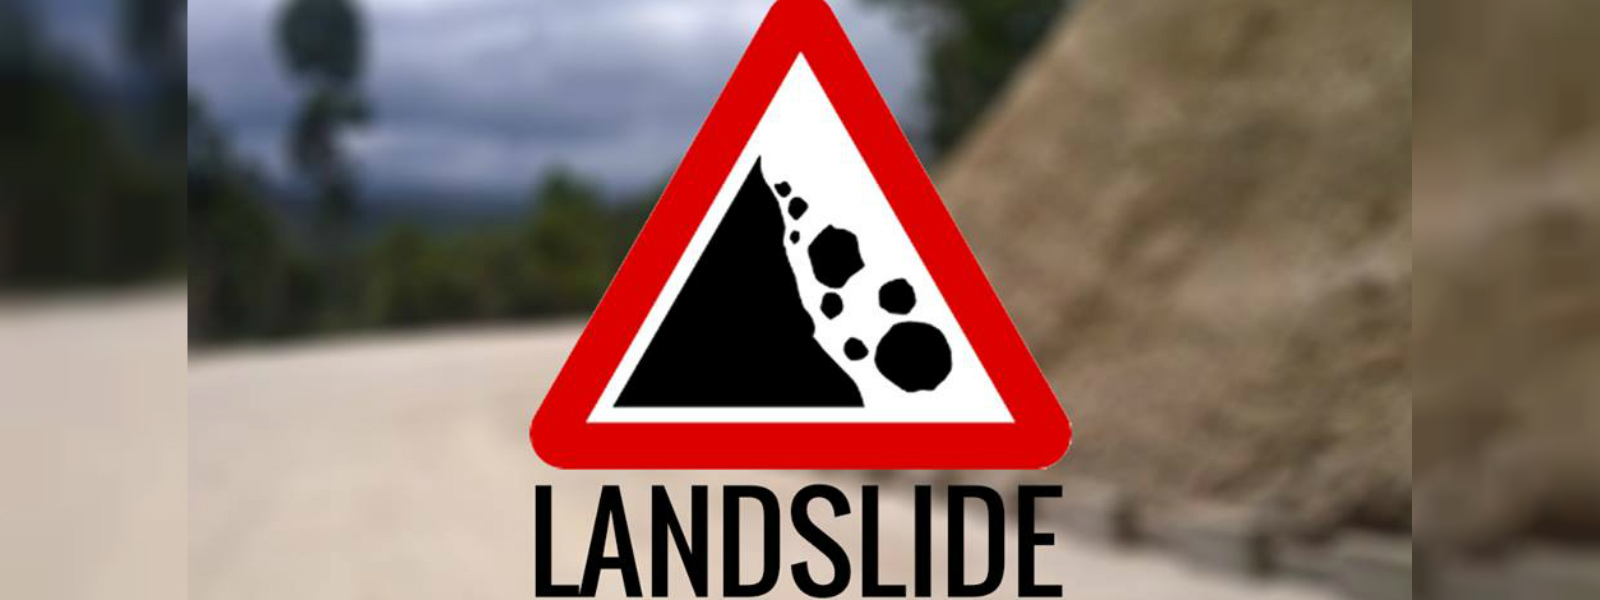 Landslide alert in place for Ratnapura and Badulla